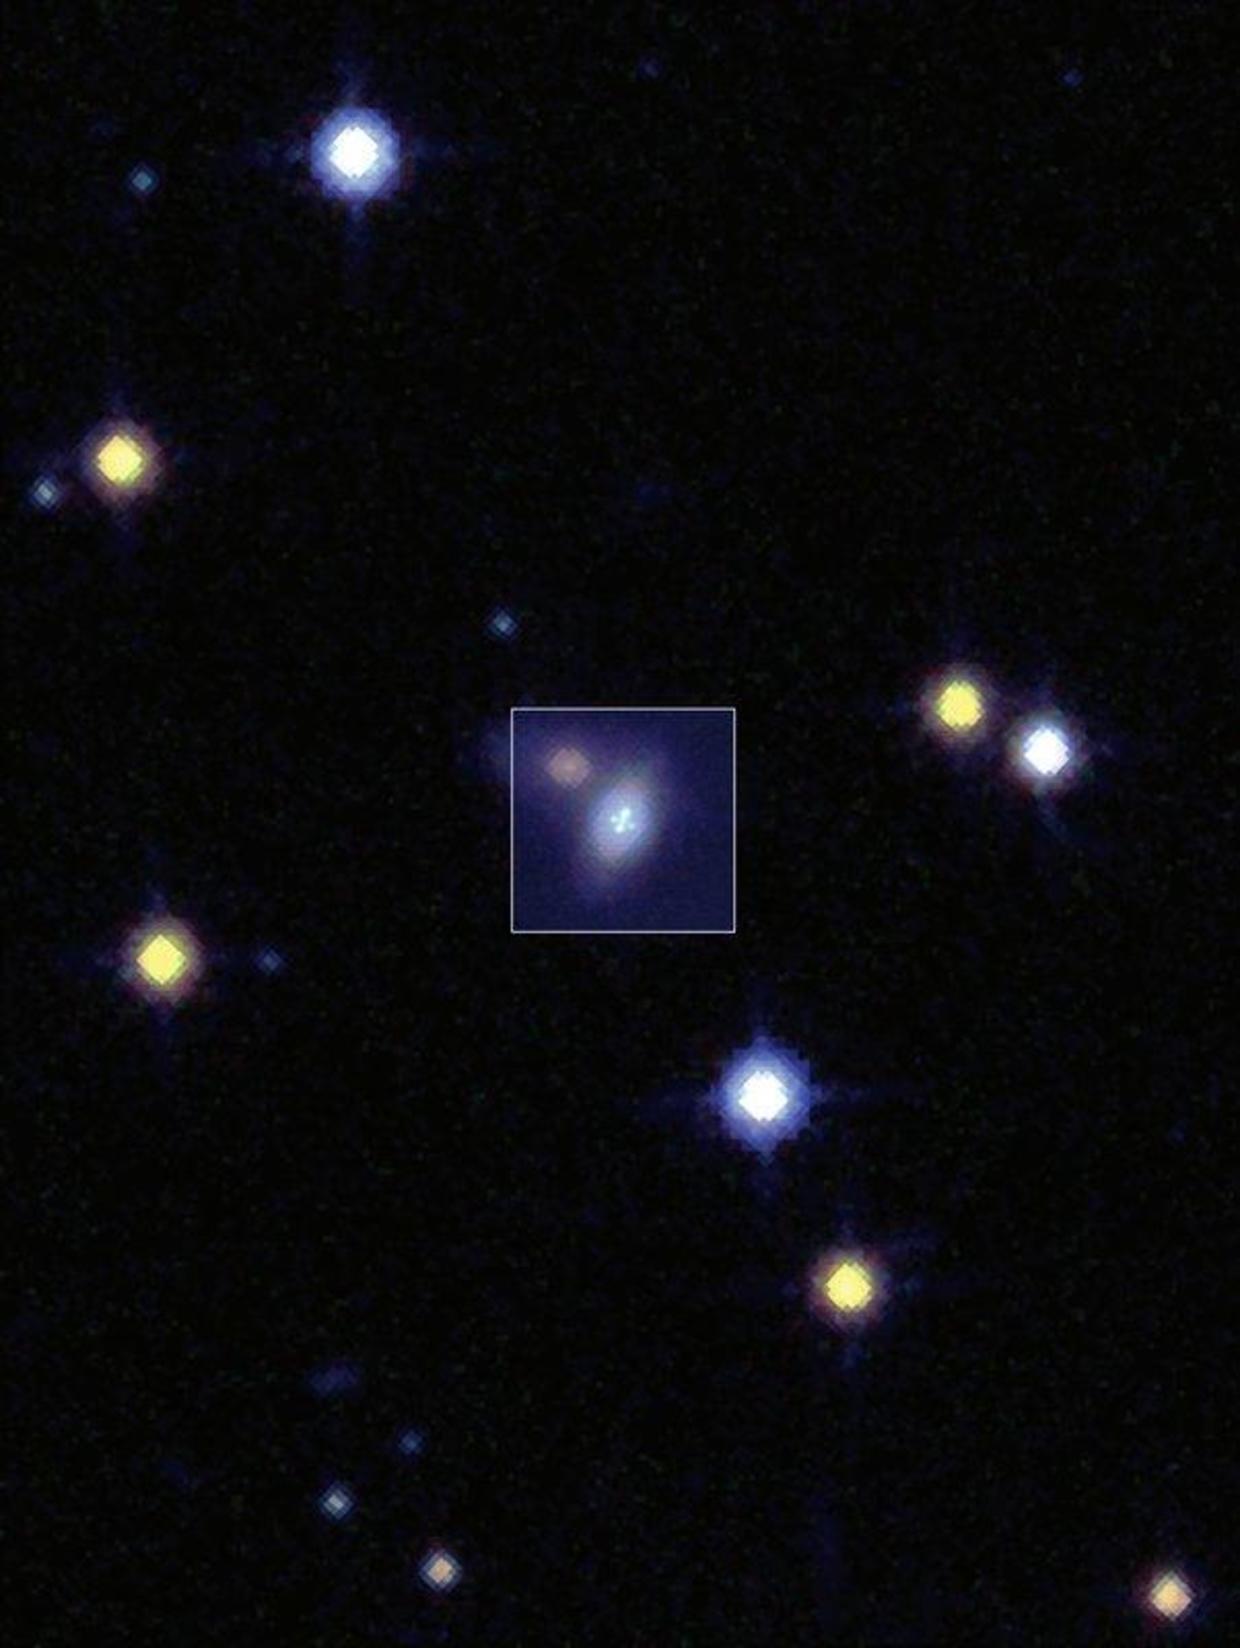 ztf-lensed-supernova-aonpammh-web-max-1400x800